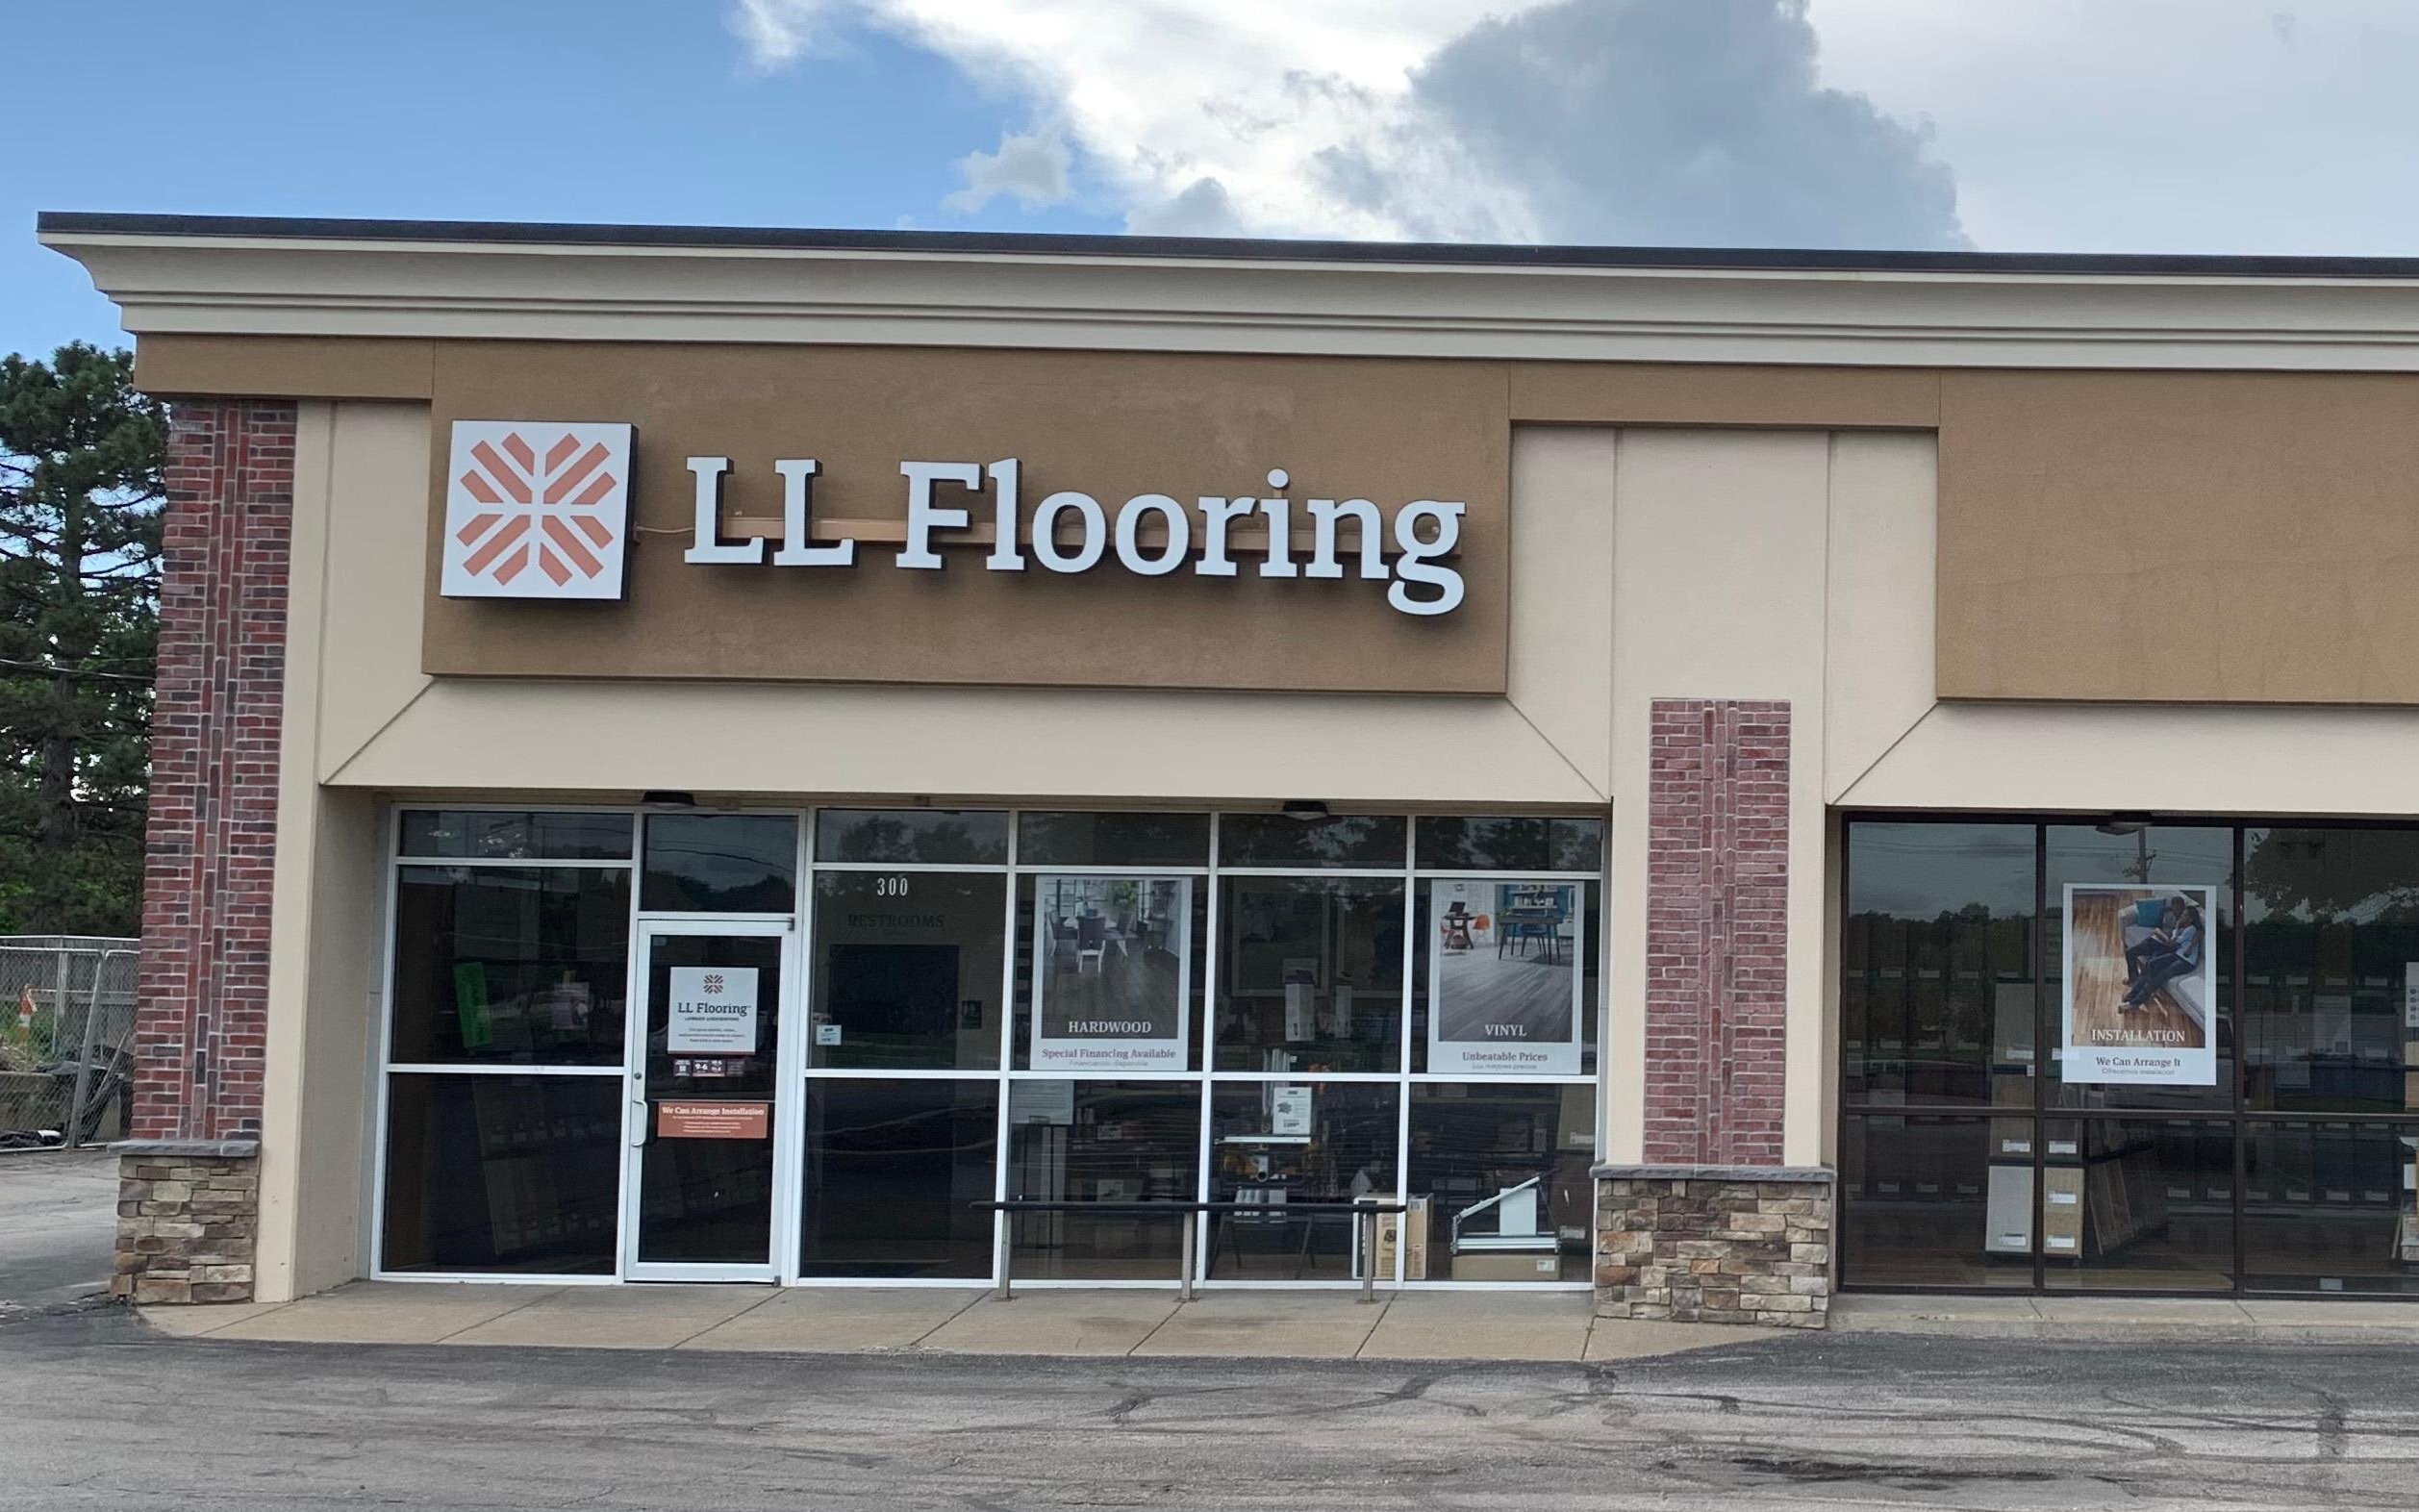 LL Flooring #1251 Lee's Summit | 300 NE 291 Highway | Storefront